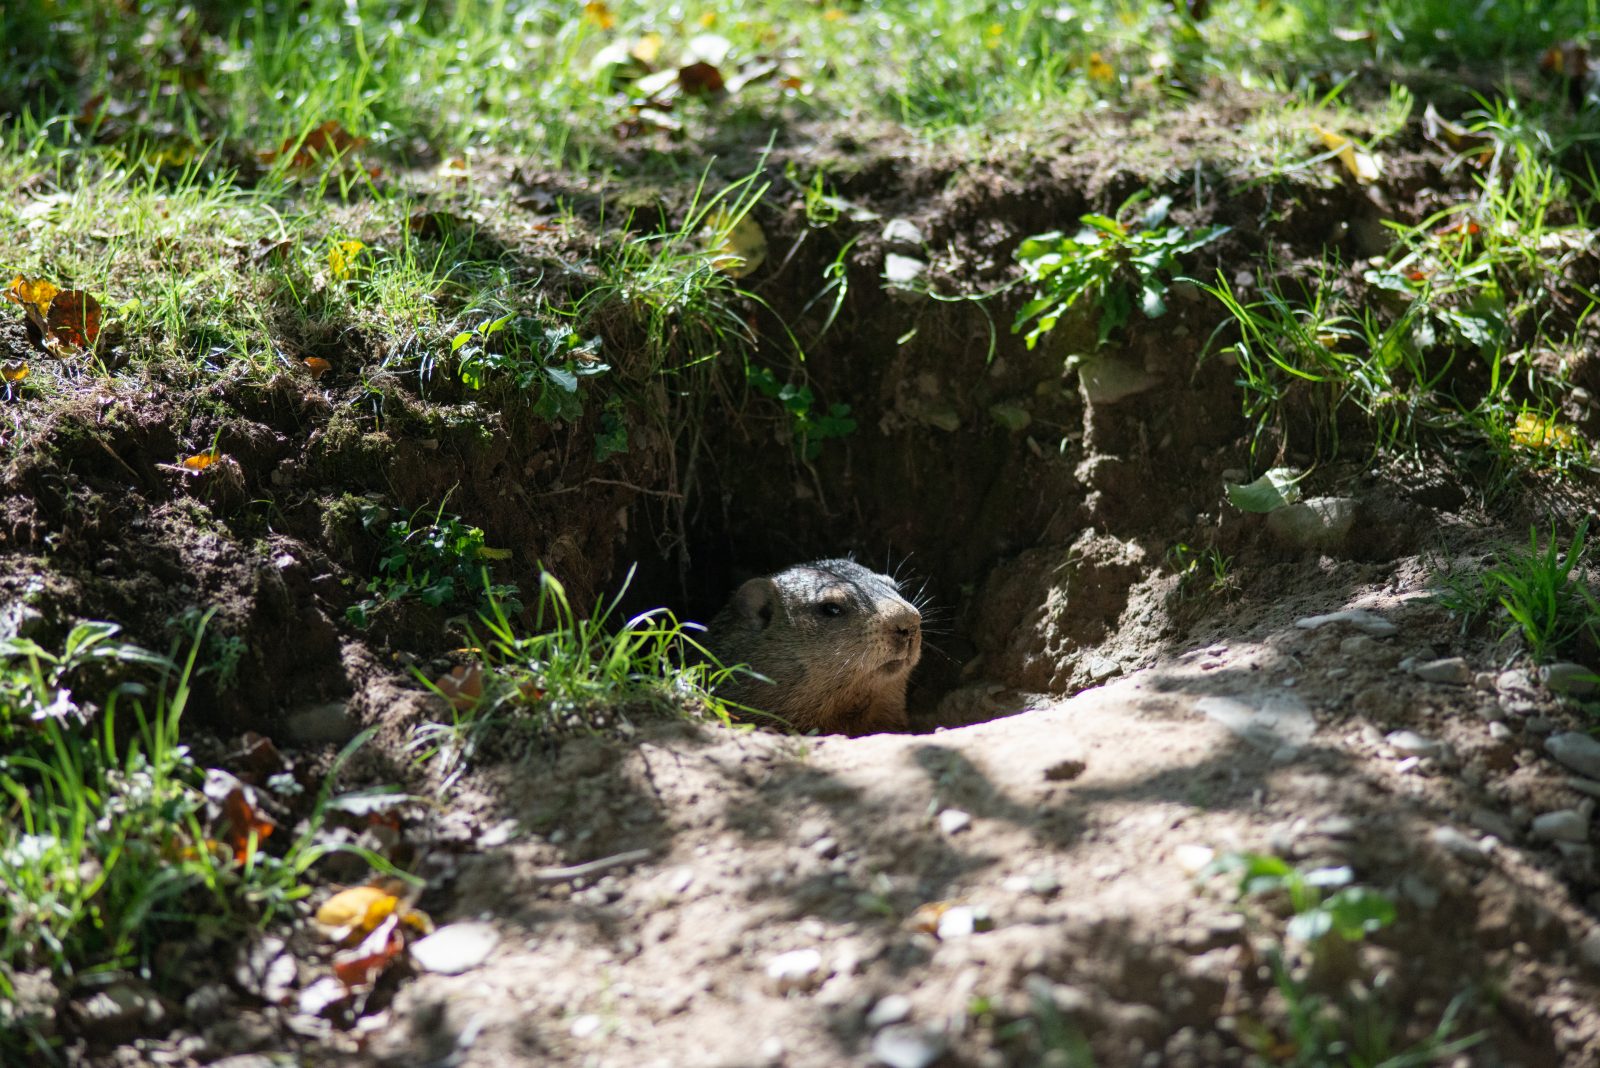 Groundhog at Farm Sanctuary